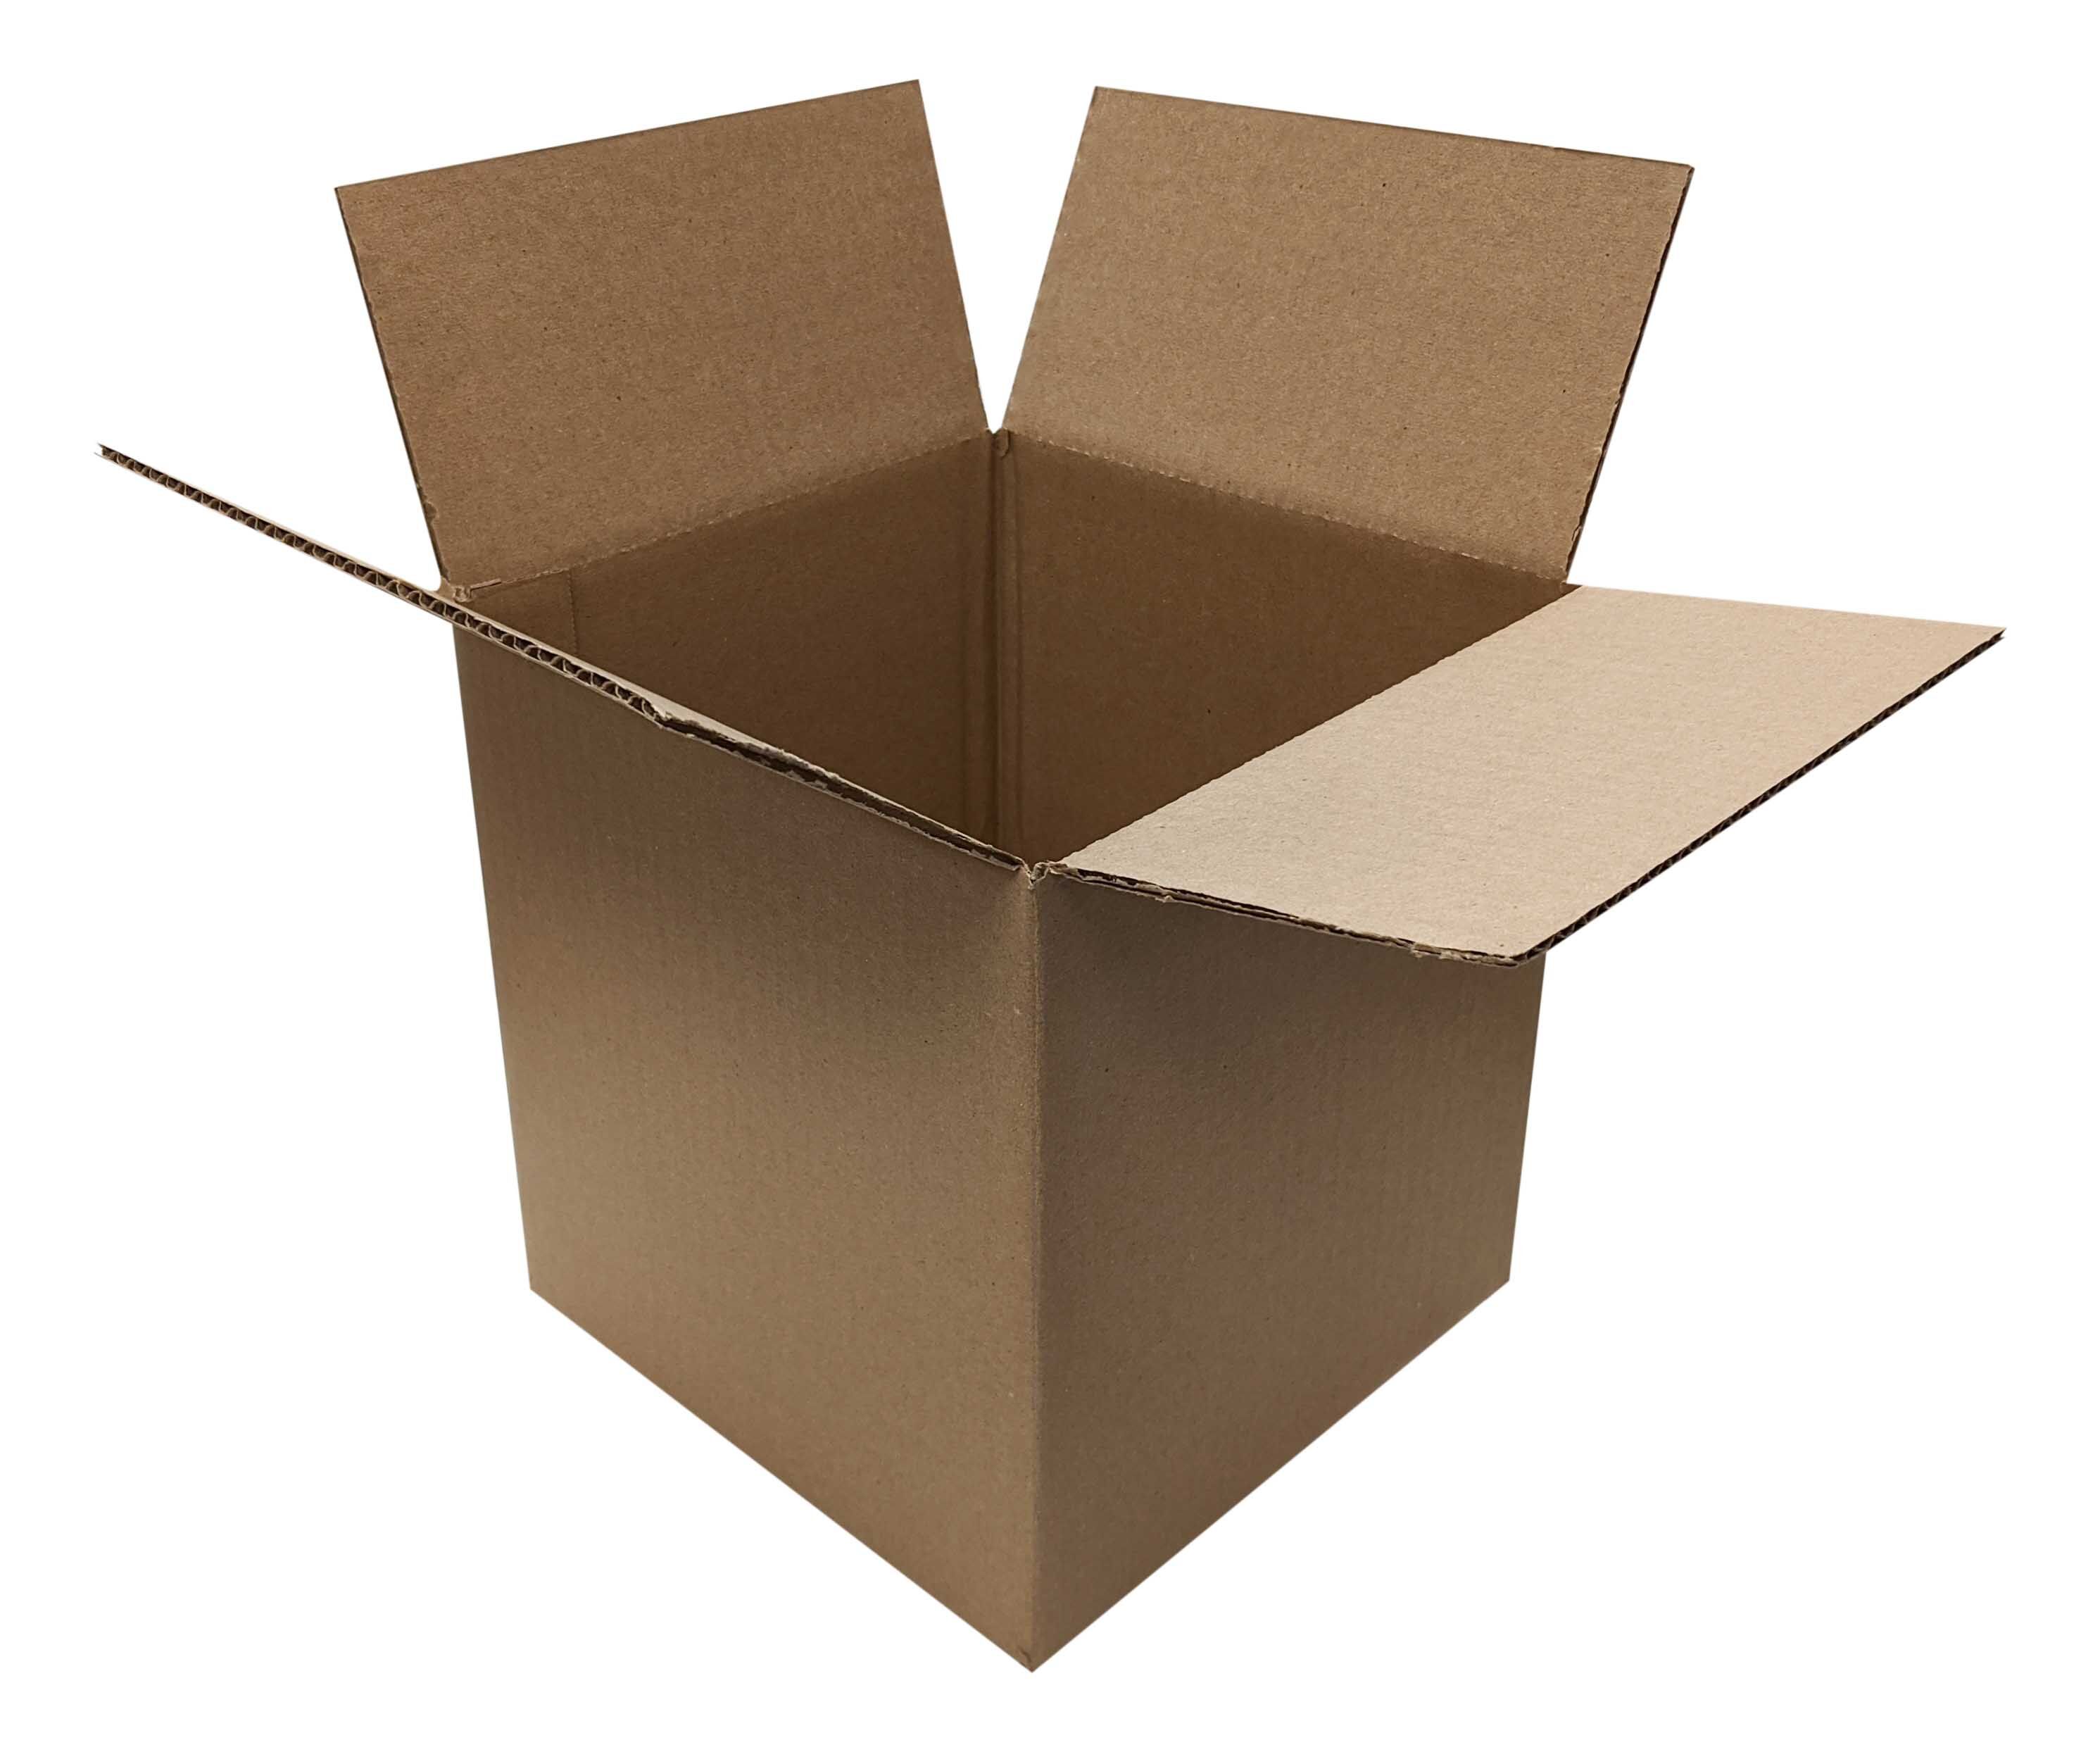 9" x 9" x 9" Corrugated Cardboard Boxes - 25 Boxes Per Bundle